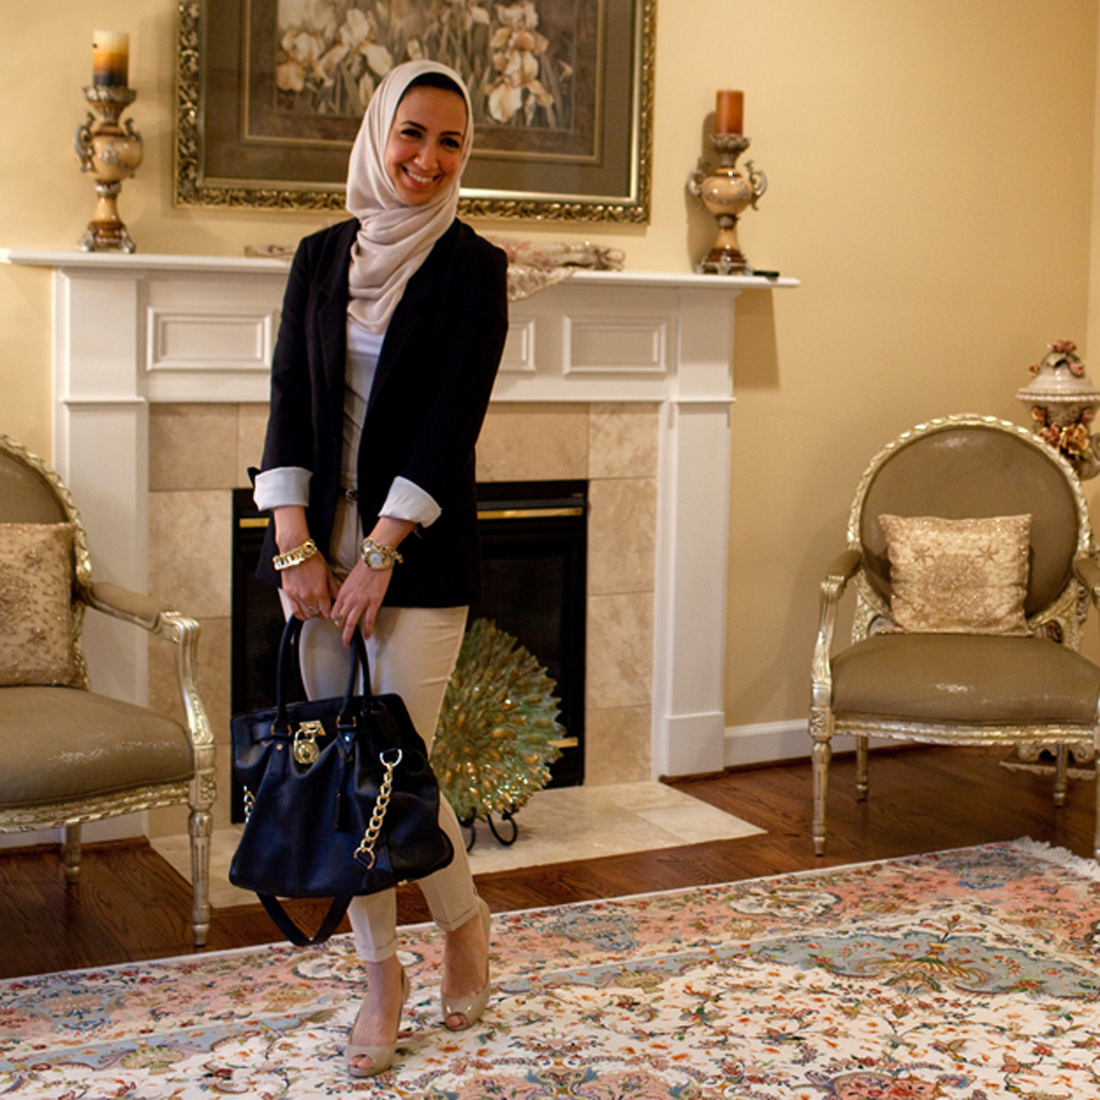 Hijabi Business Attire, Image Courtesy of NPR Intern Edition